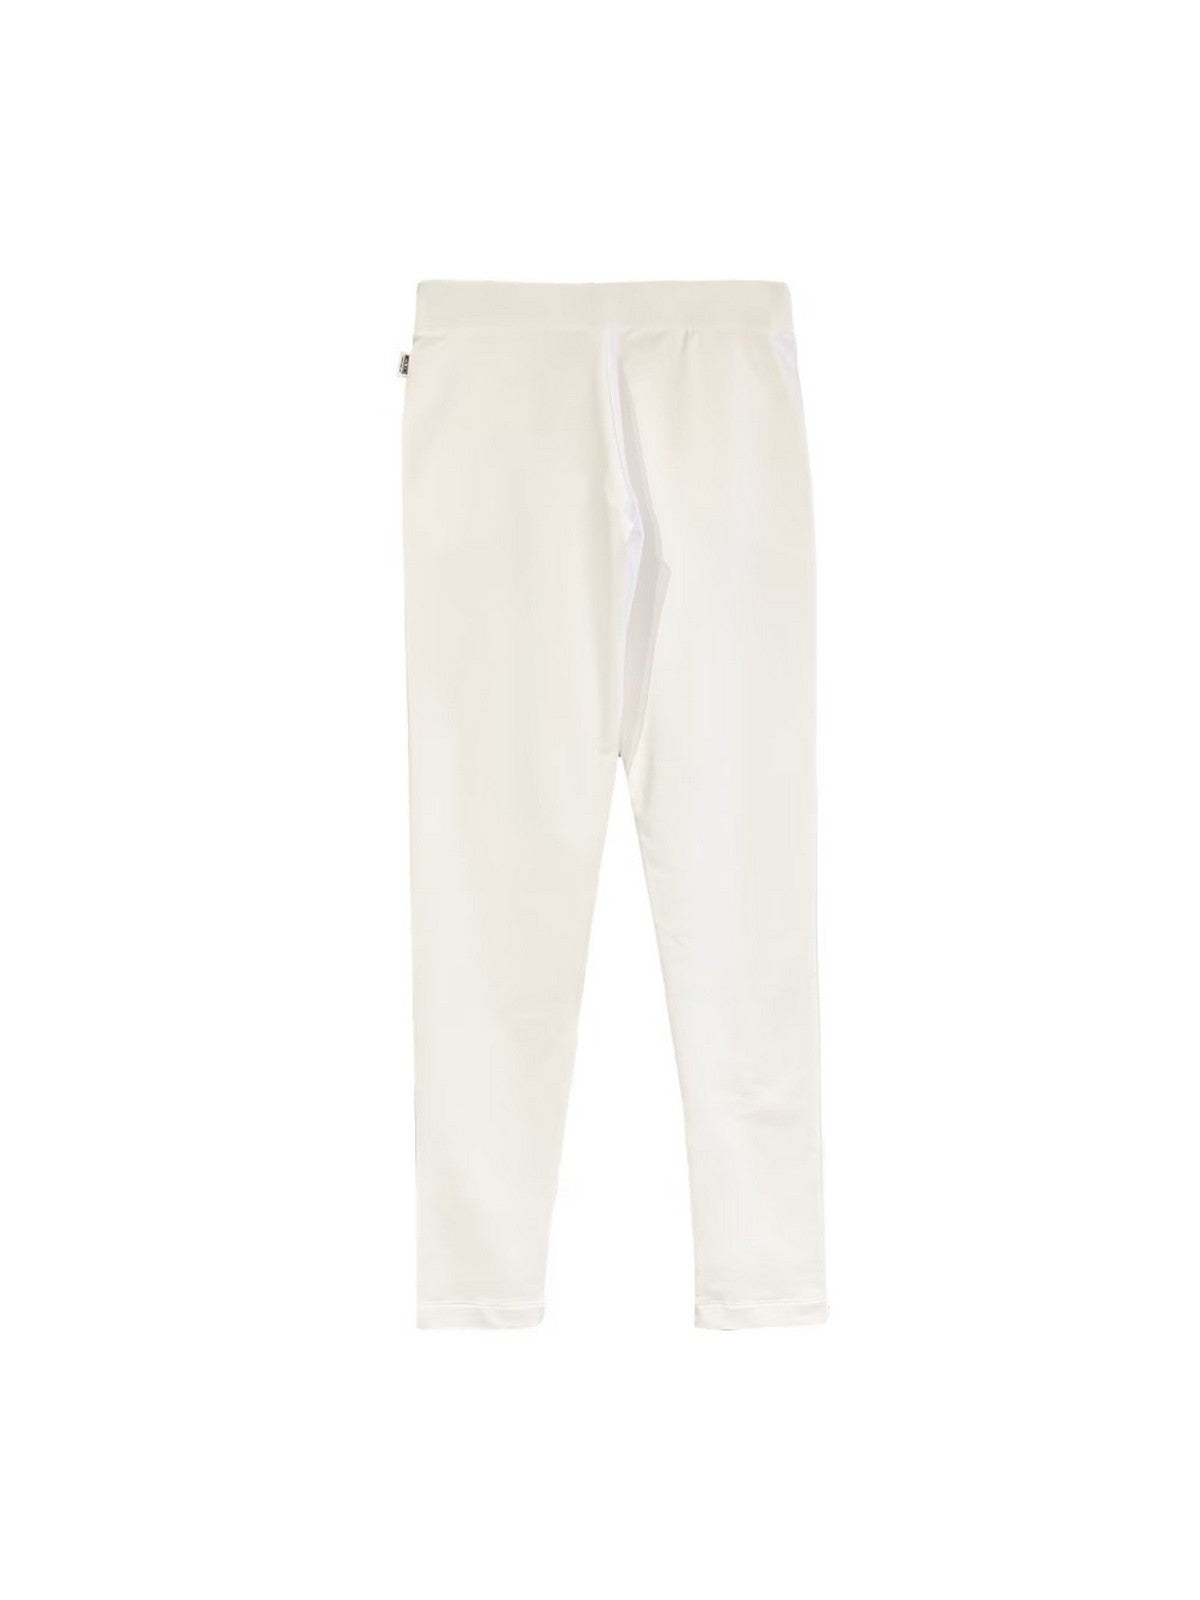 MOSCHINO UNDERWEAR Pantalon Femme 4329 9002 Blanc